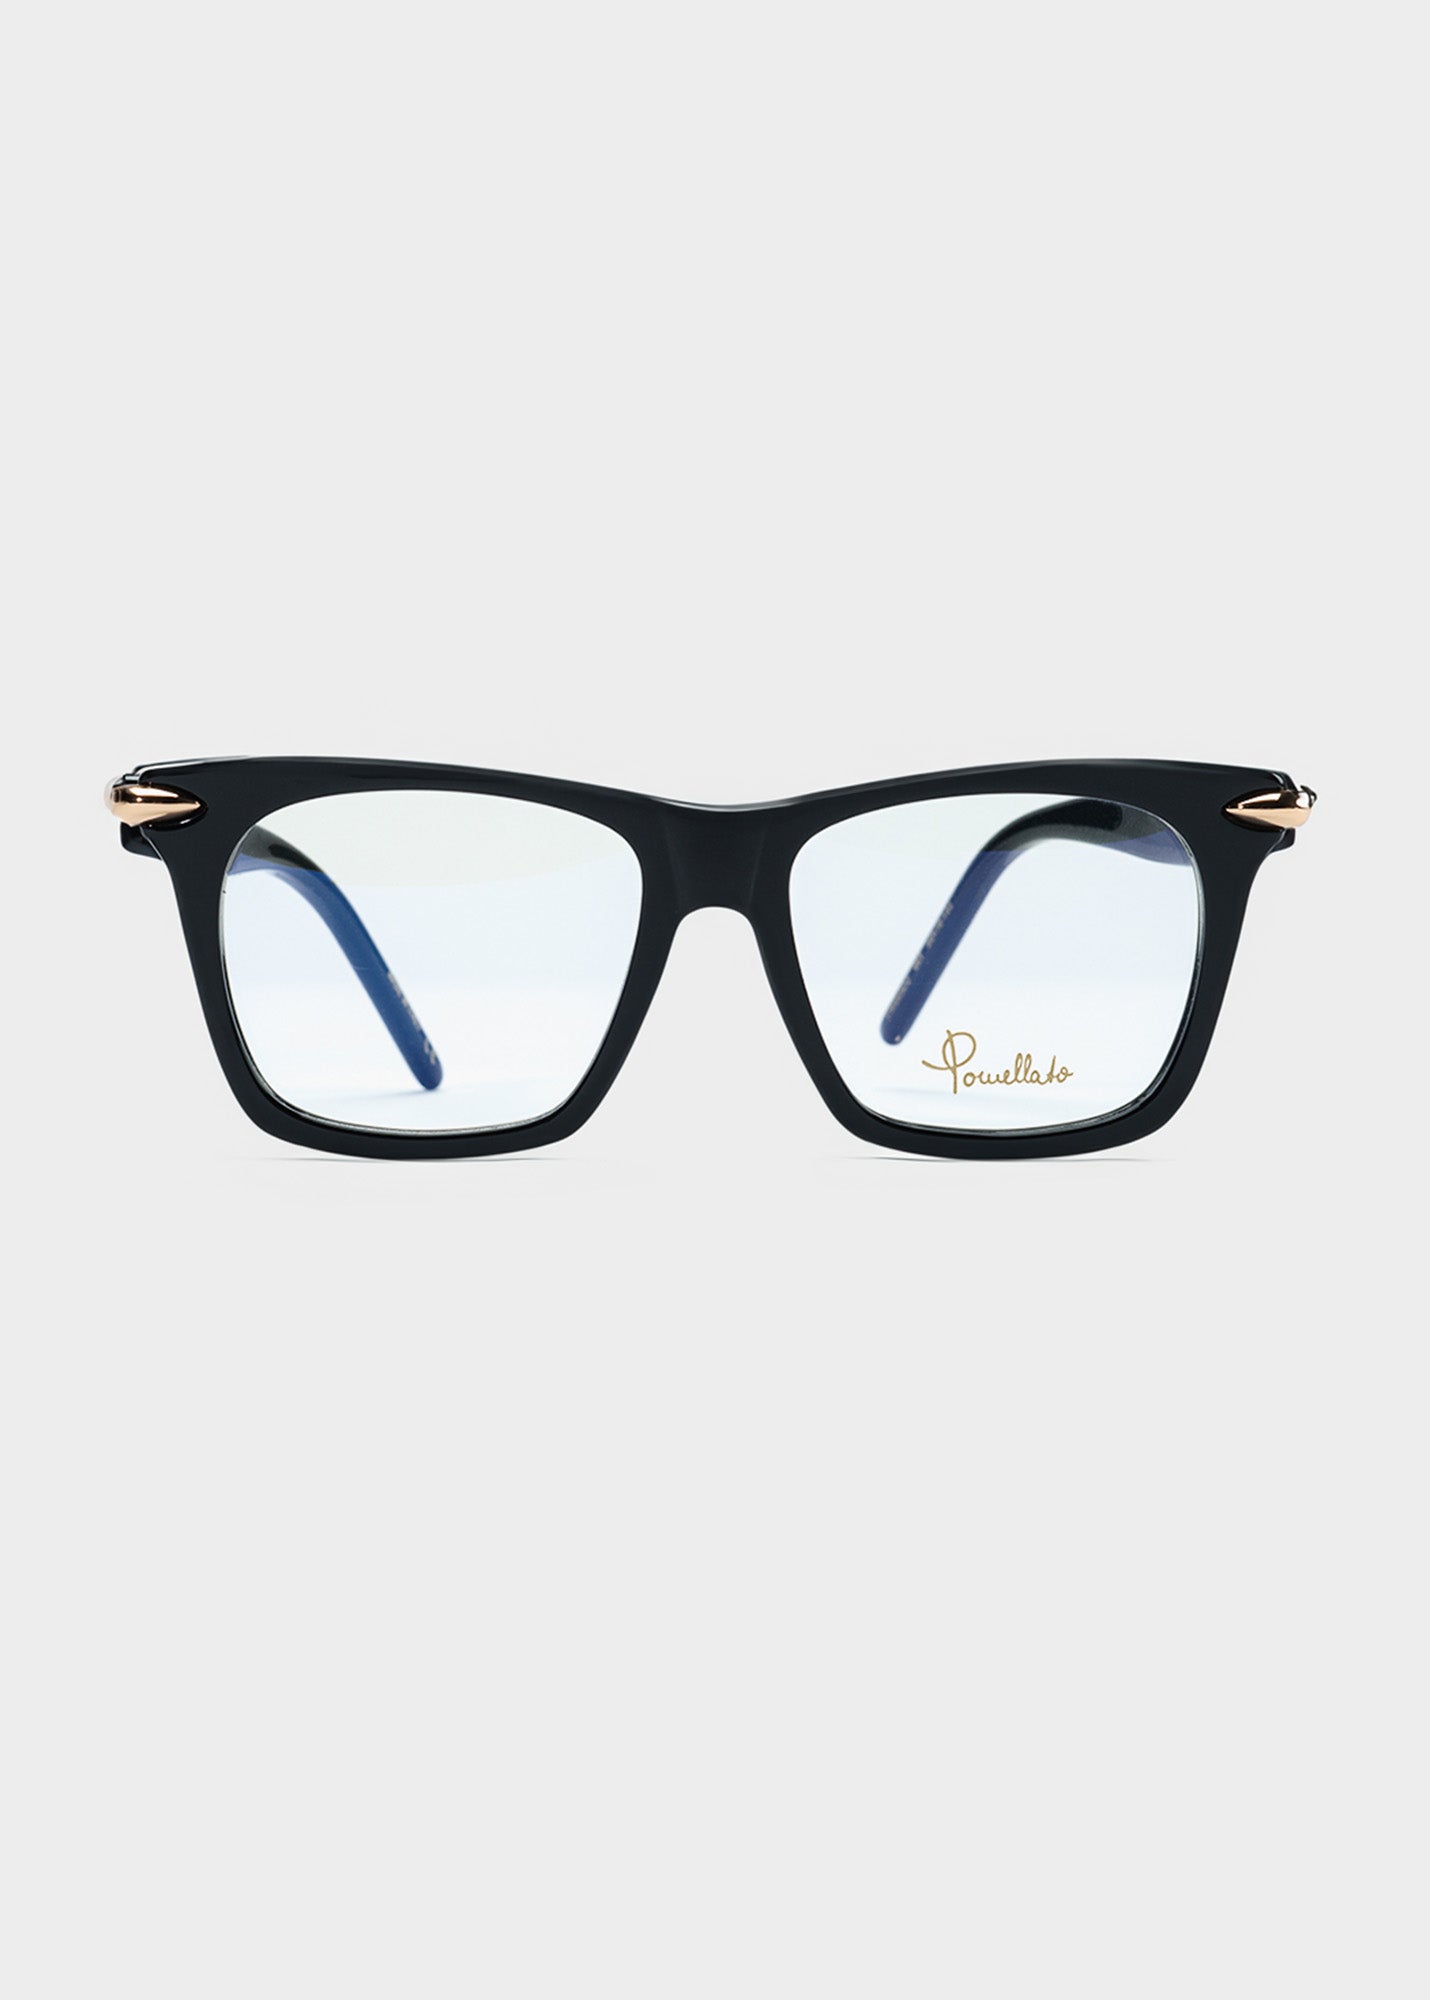 Pomellato Optica Black Eyeglass Frames